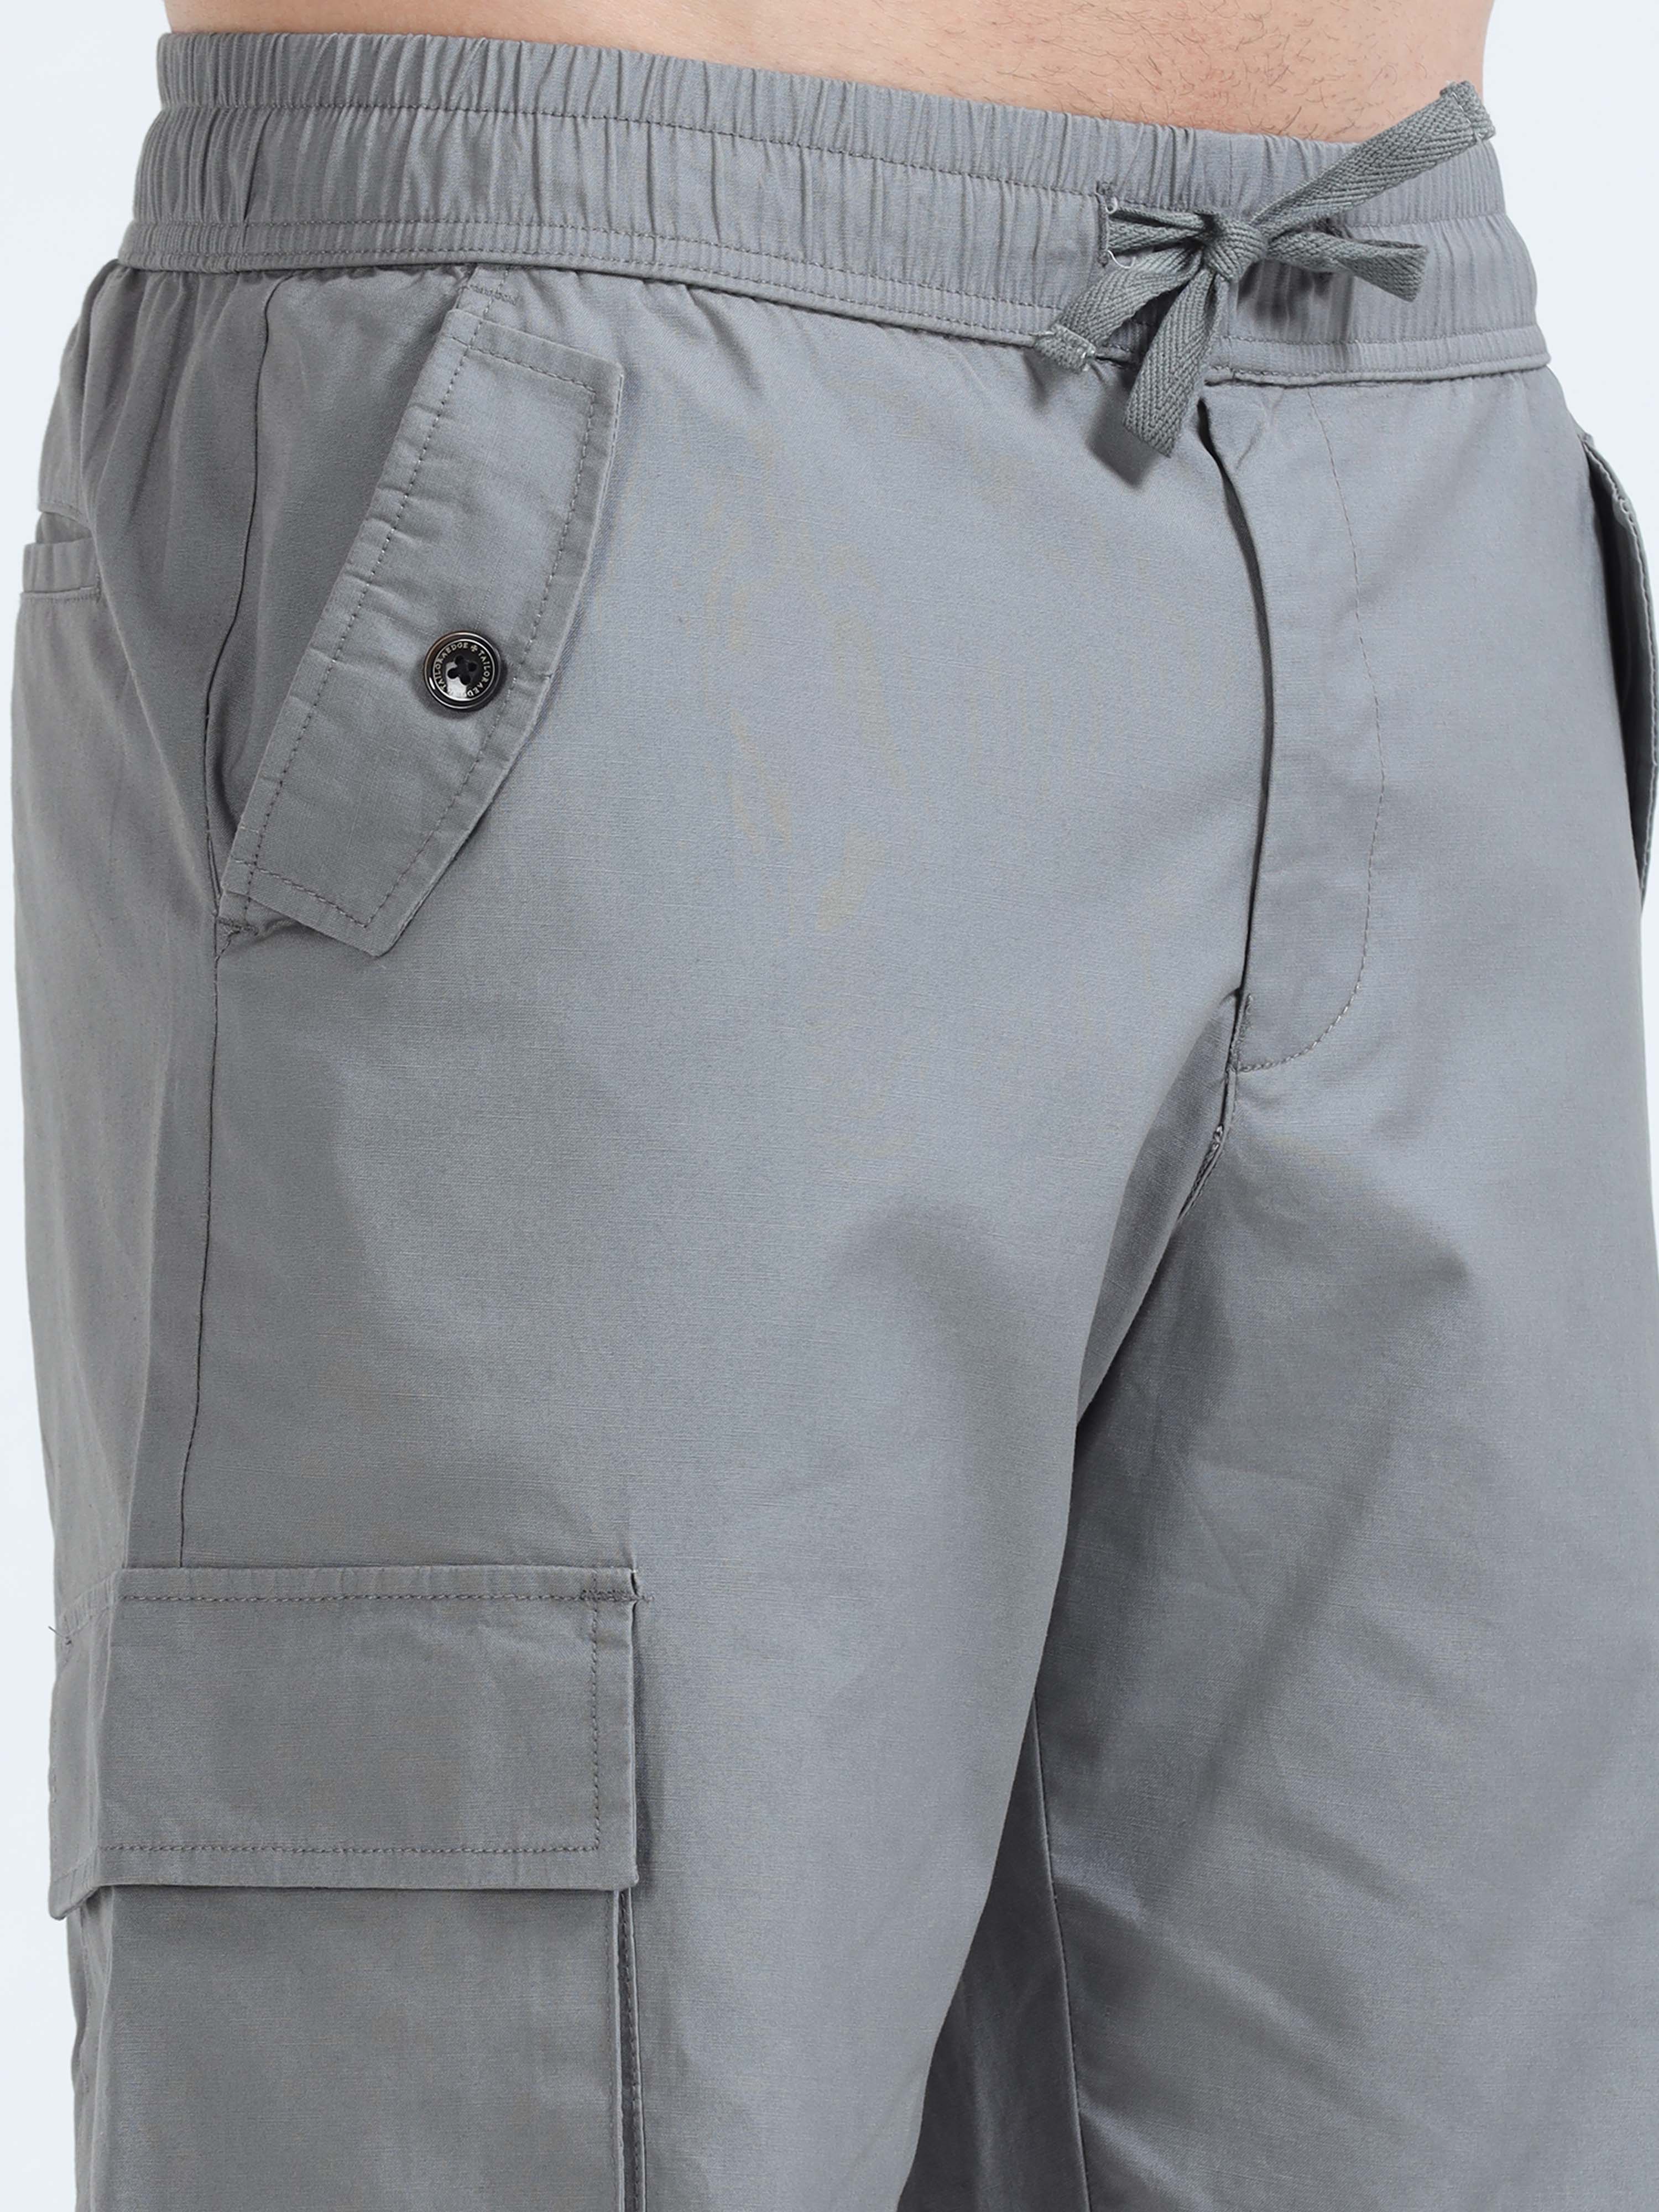 Flexi Waist Zip Grey Cargo Pant